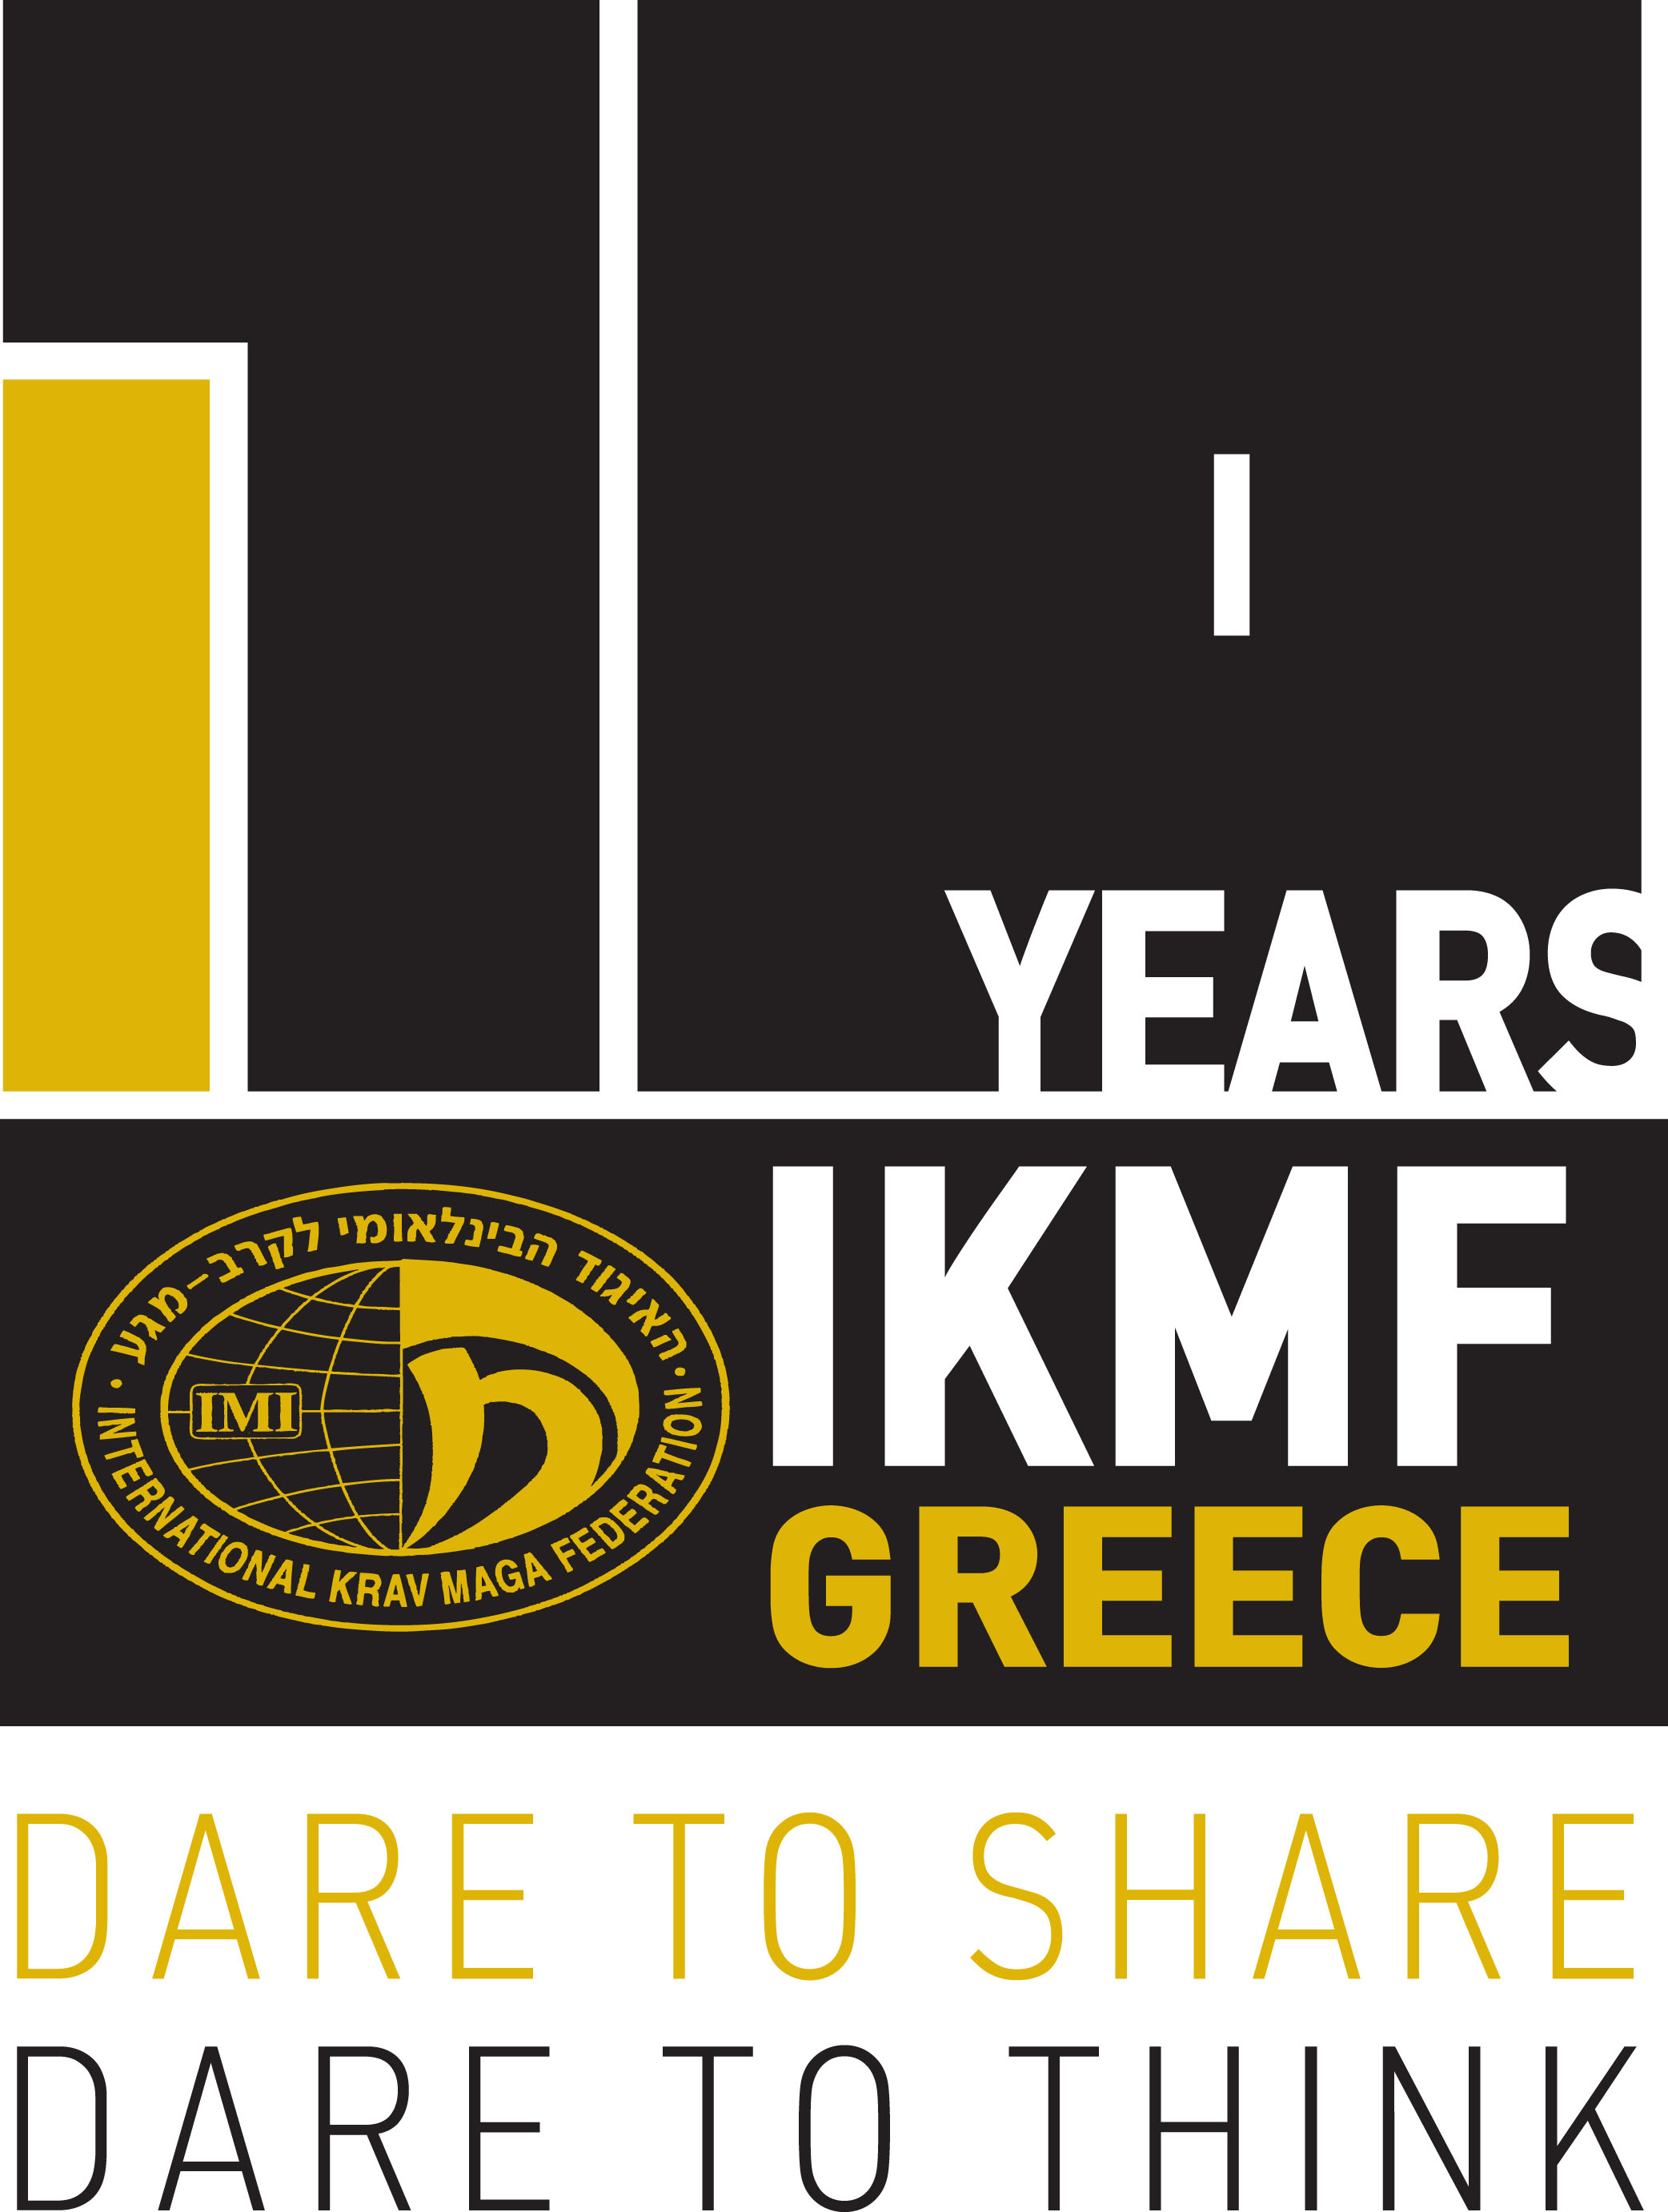 THE HISTORY OF IKMF GREECE